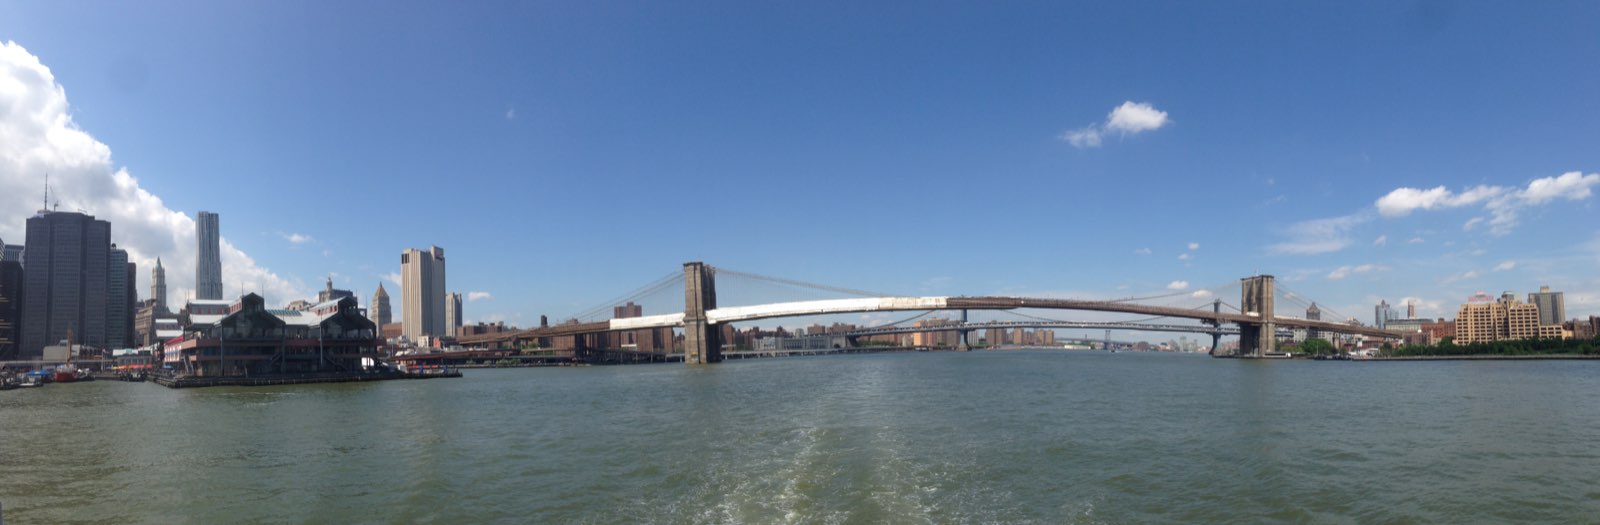 Brooklyn bridge panorama